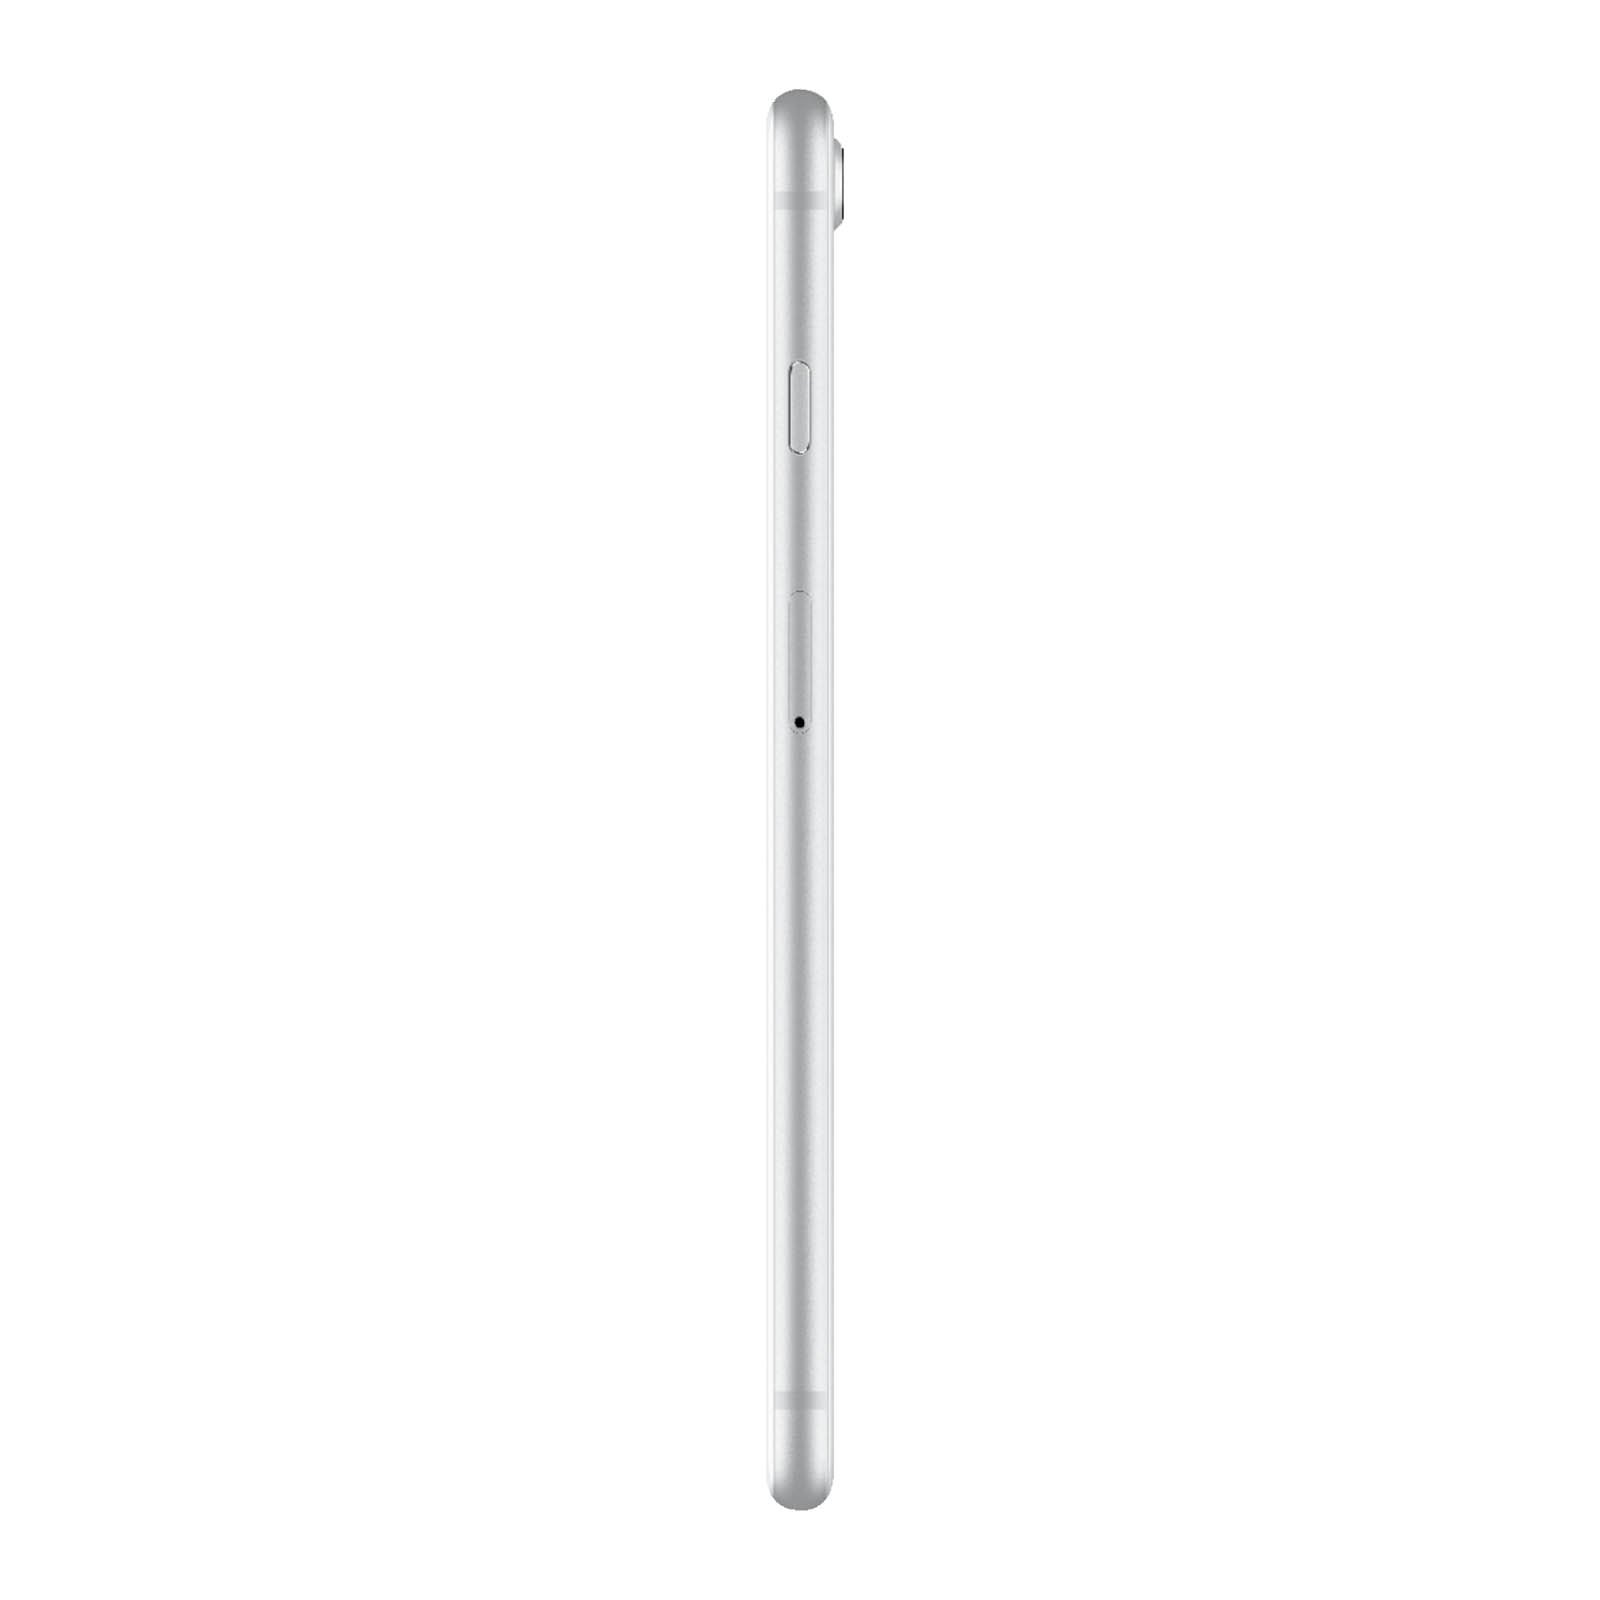 Apple iPhone 8 64GB Silver Fair - Unlocked